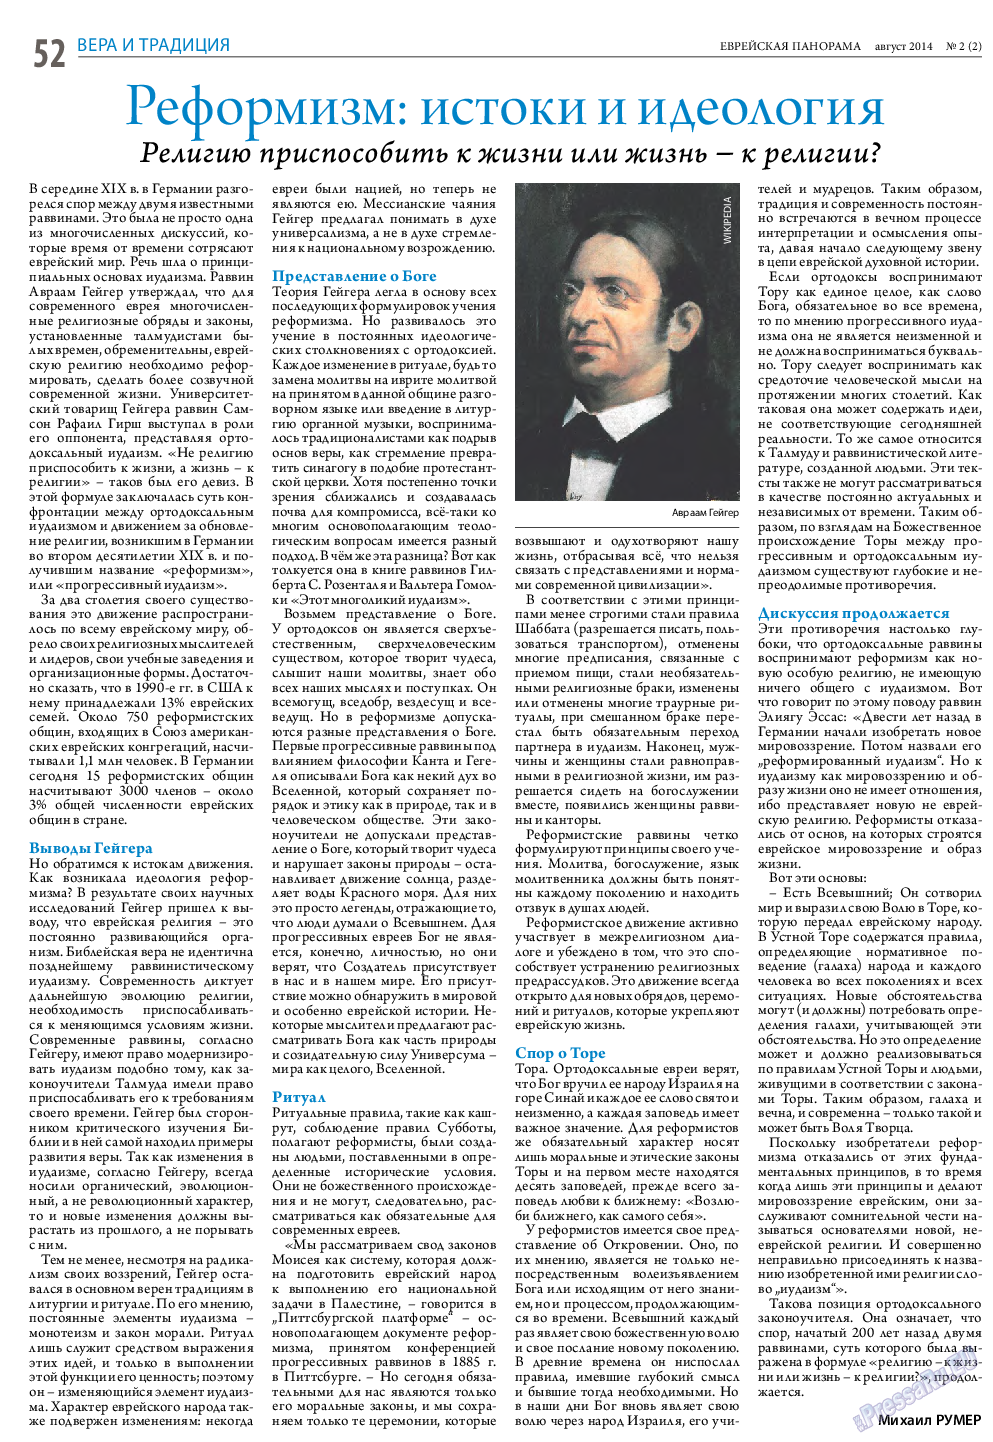 Еврейская панорама, газета. 2014 №2 стр.52